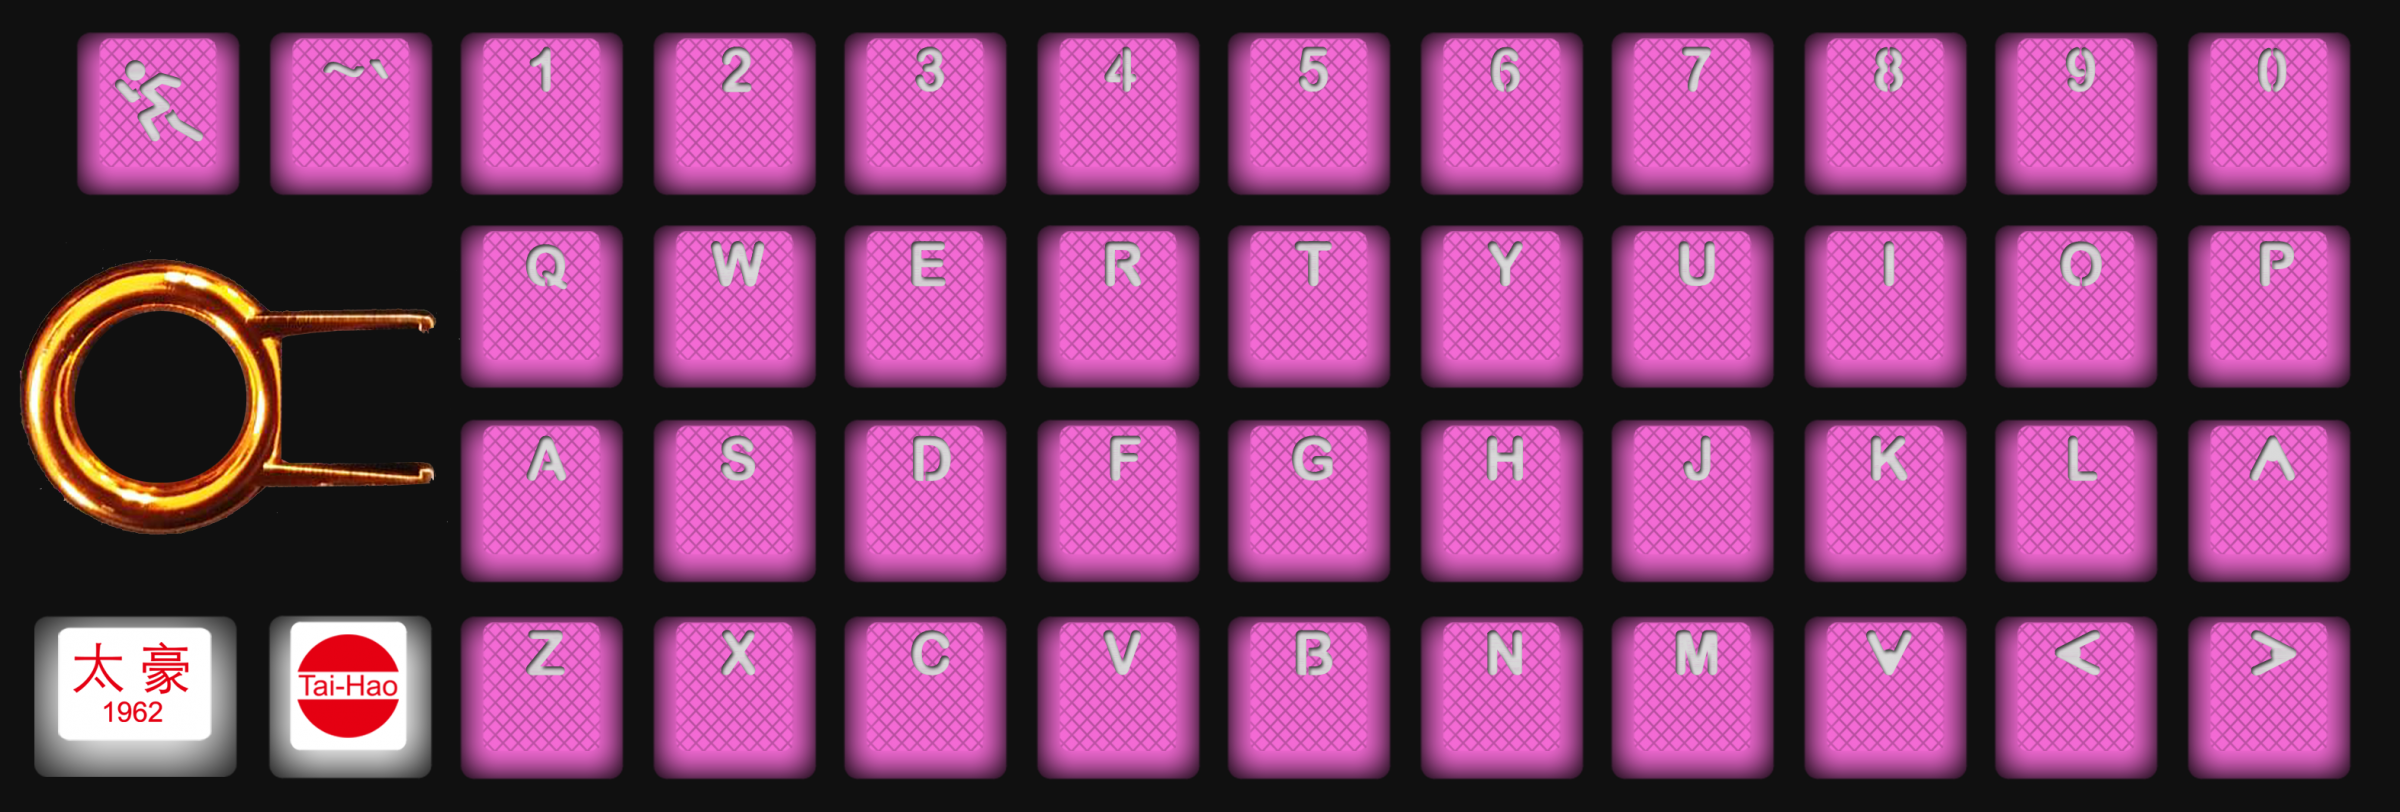 Tai-Hao 42 Key TPR Backlit Double Shot Rubber Keycaps Set Neon Pink MKFQOU9DG3 |0|